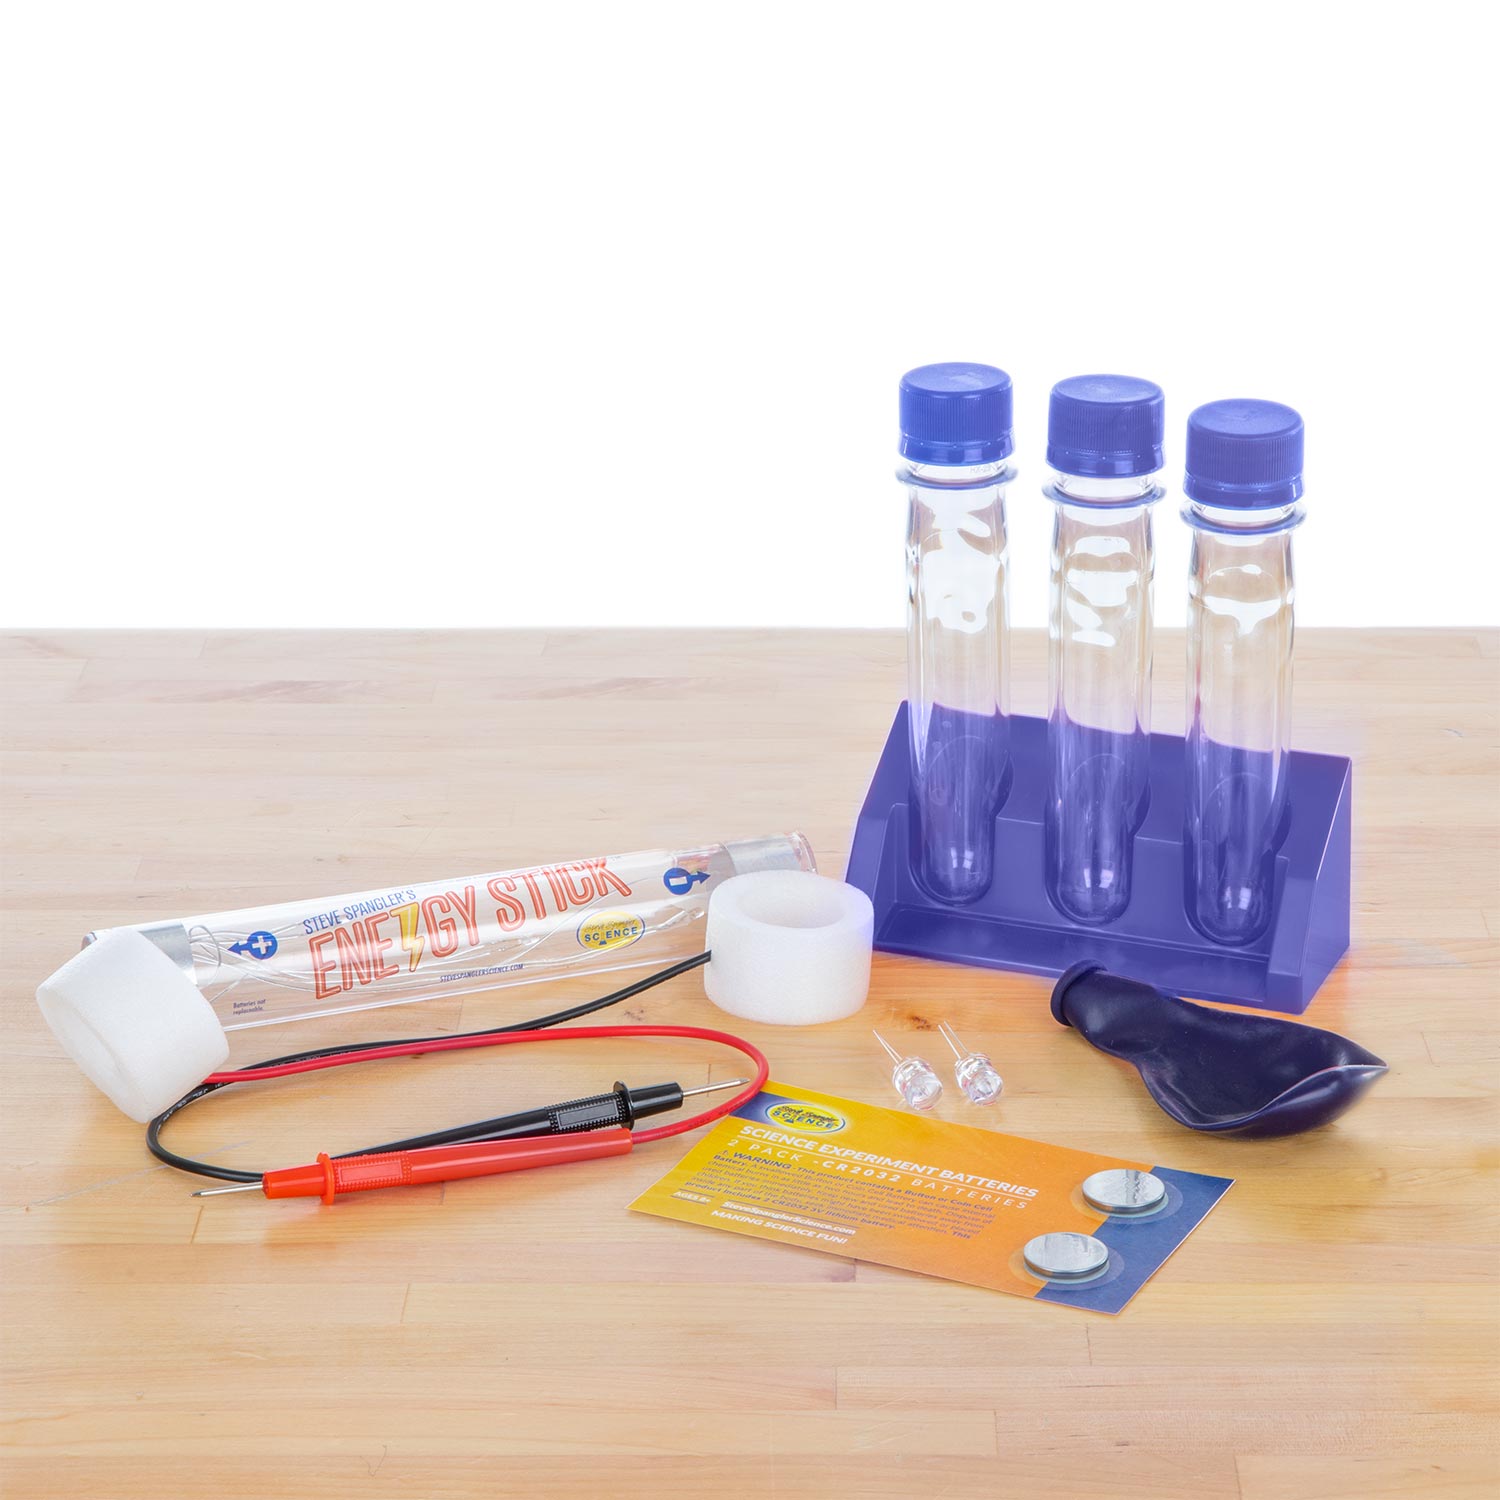 Energy Stick® Science Kit